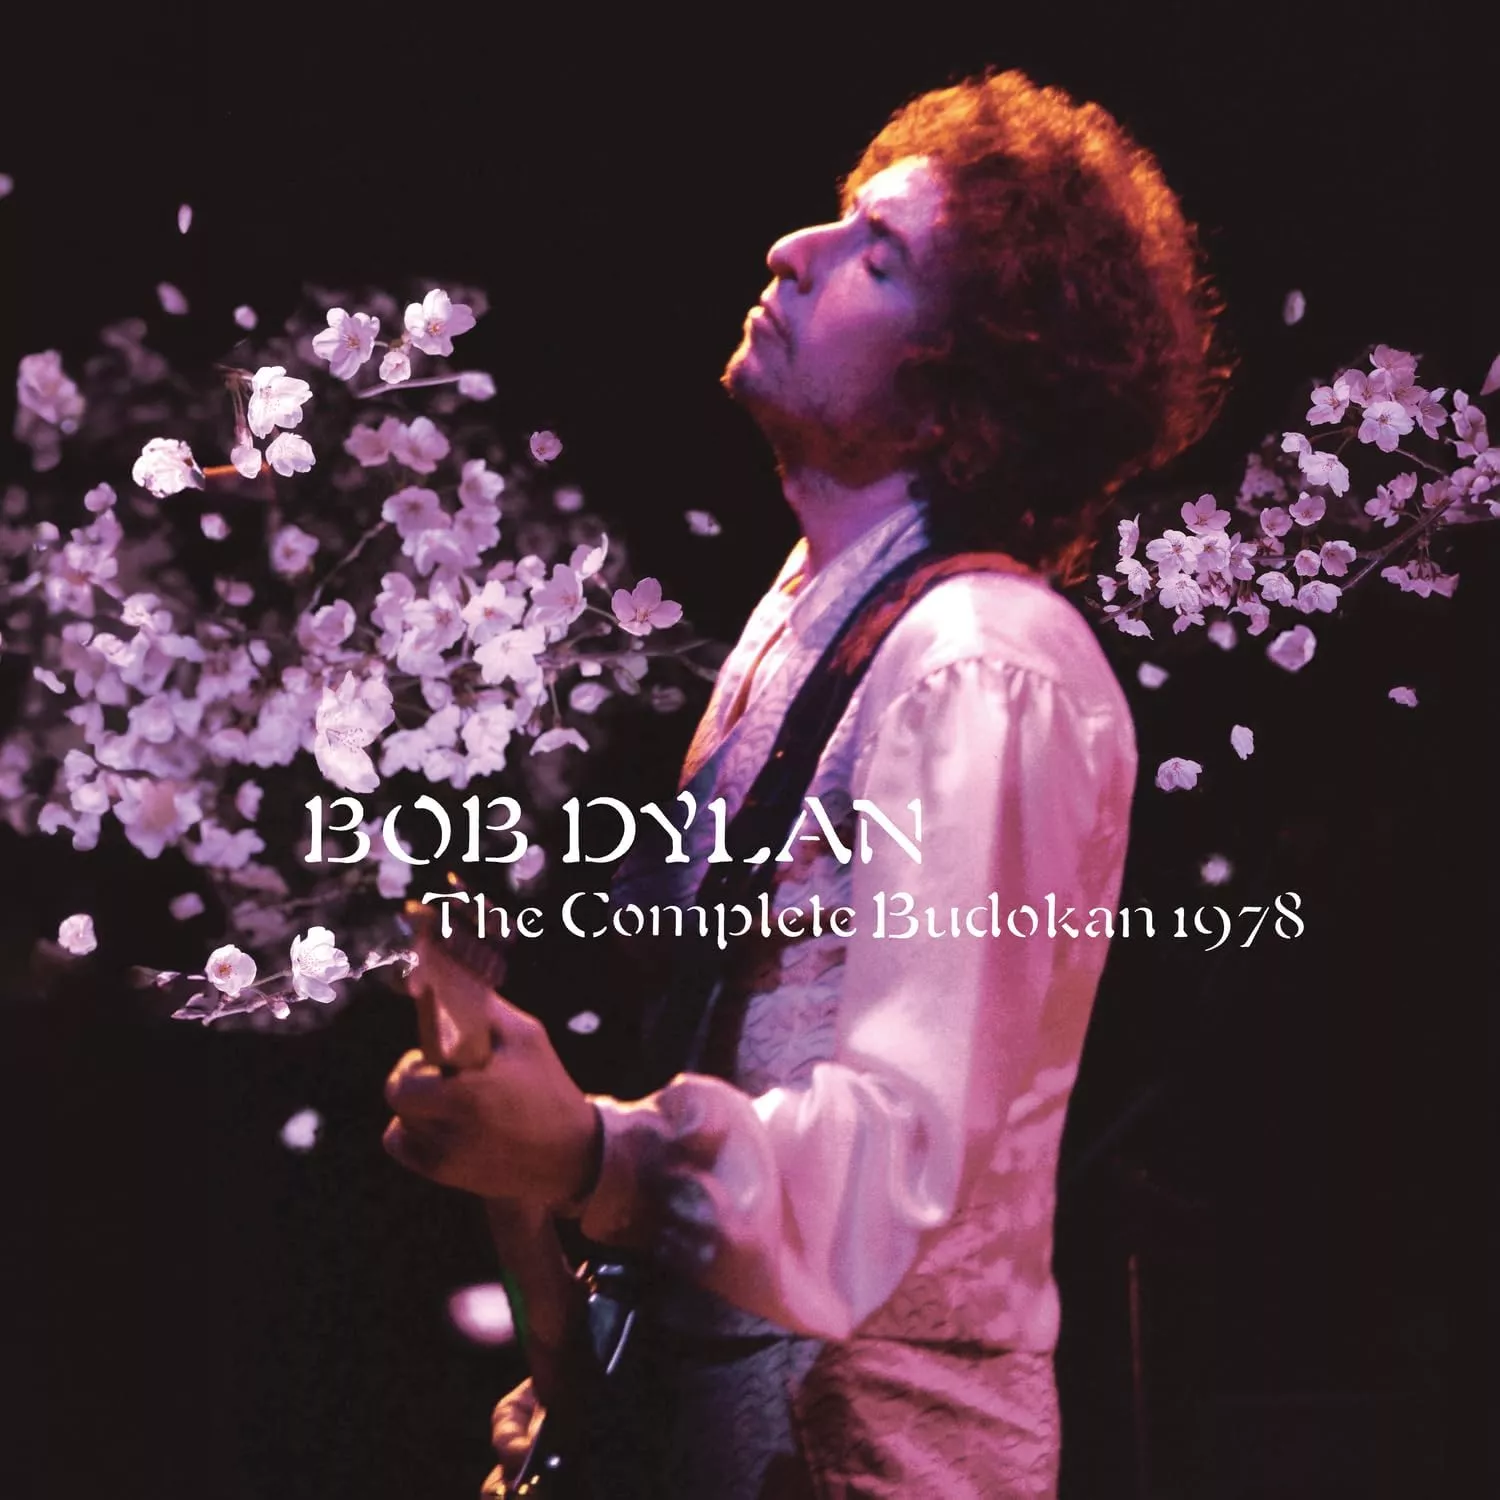 The Complete Budokan 1978 - Bob Dylan